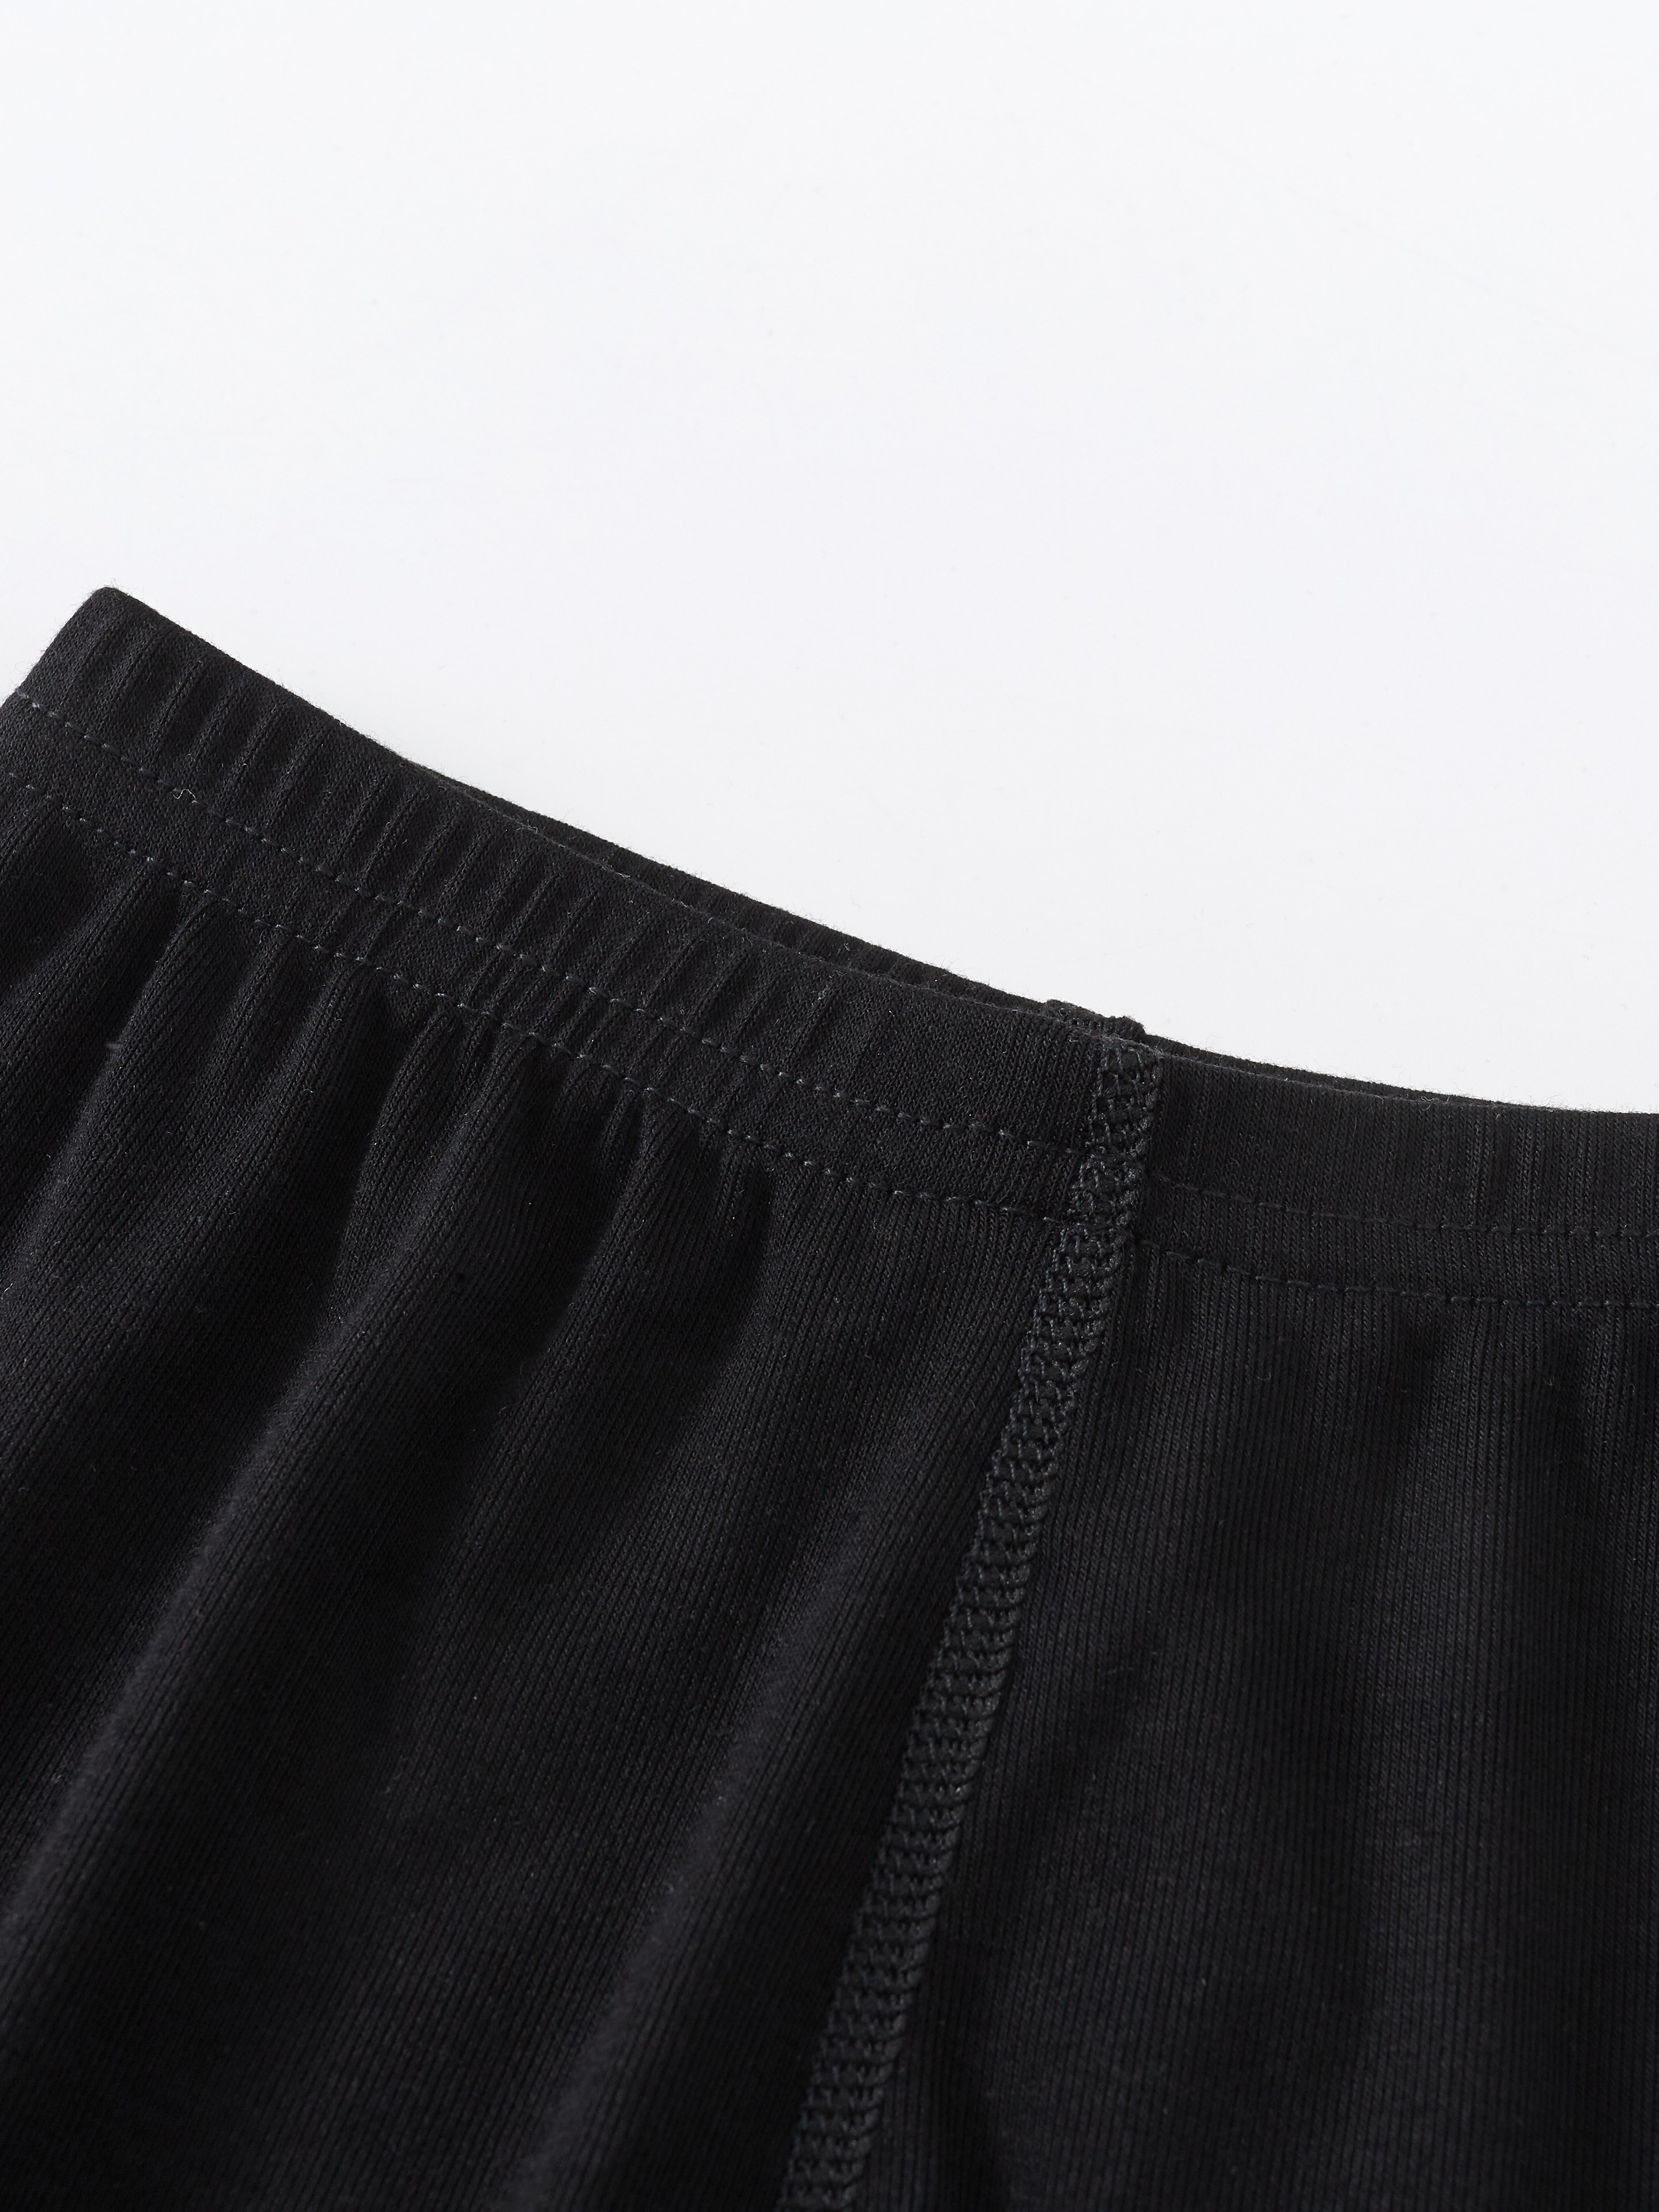 Bodyband Under Skirt Shorts for Women & Girls Under Dress Shorts